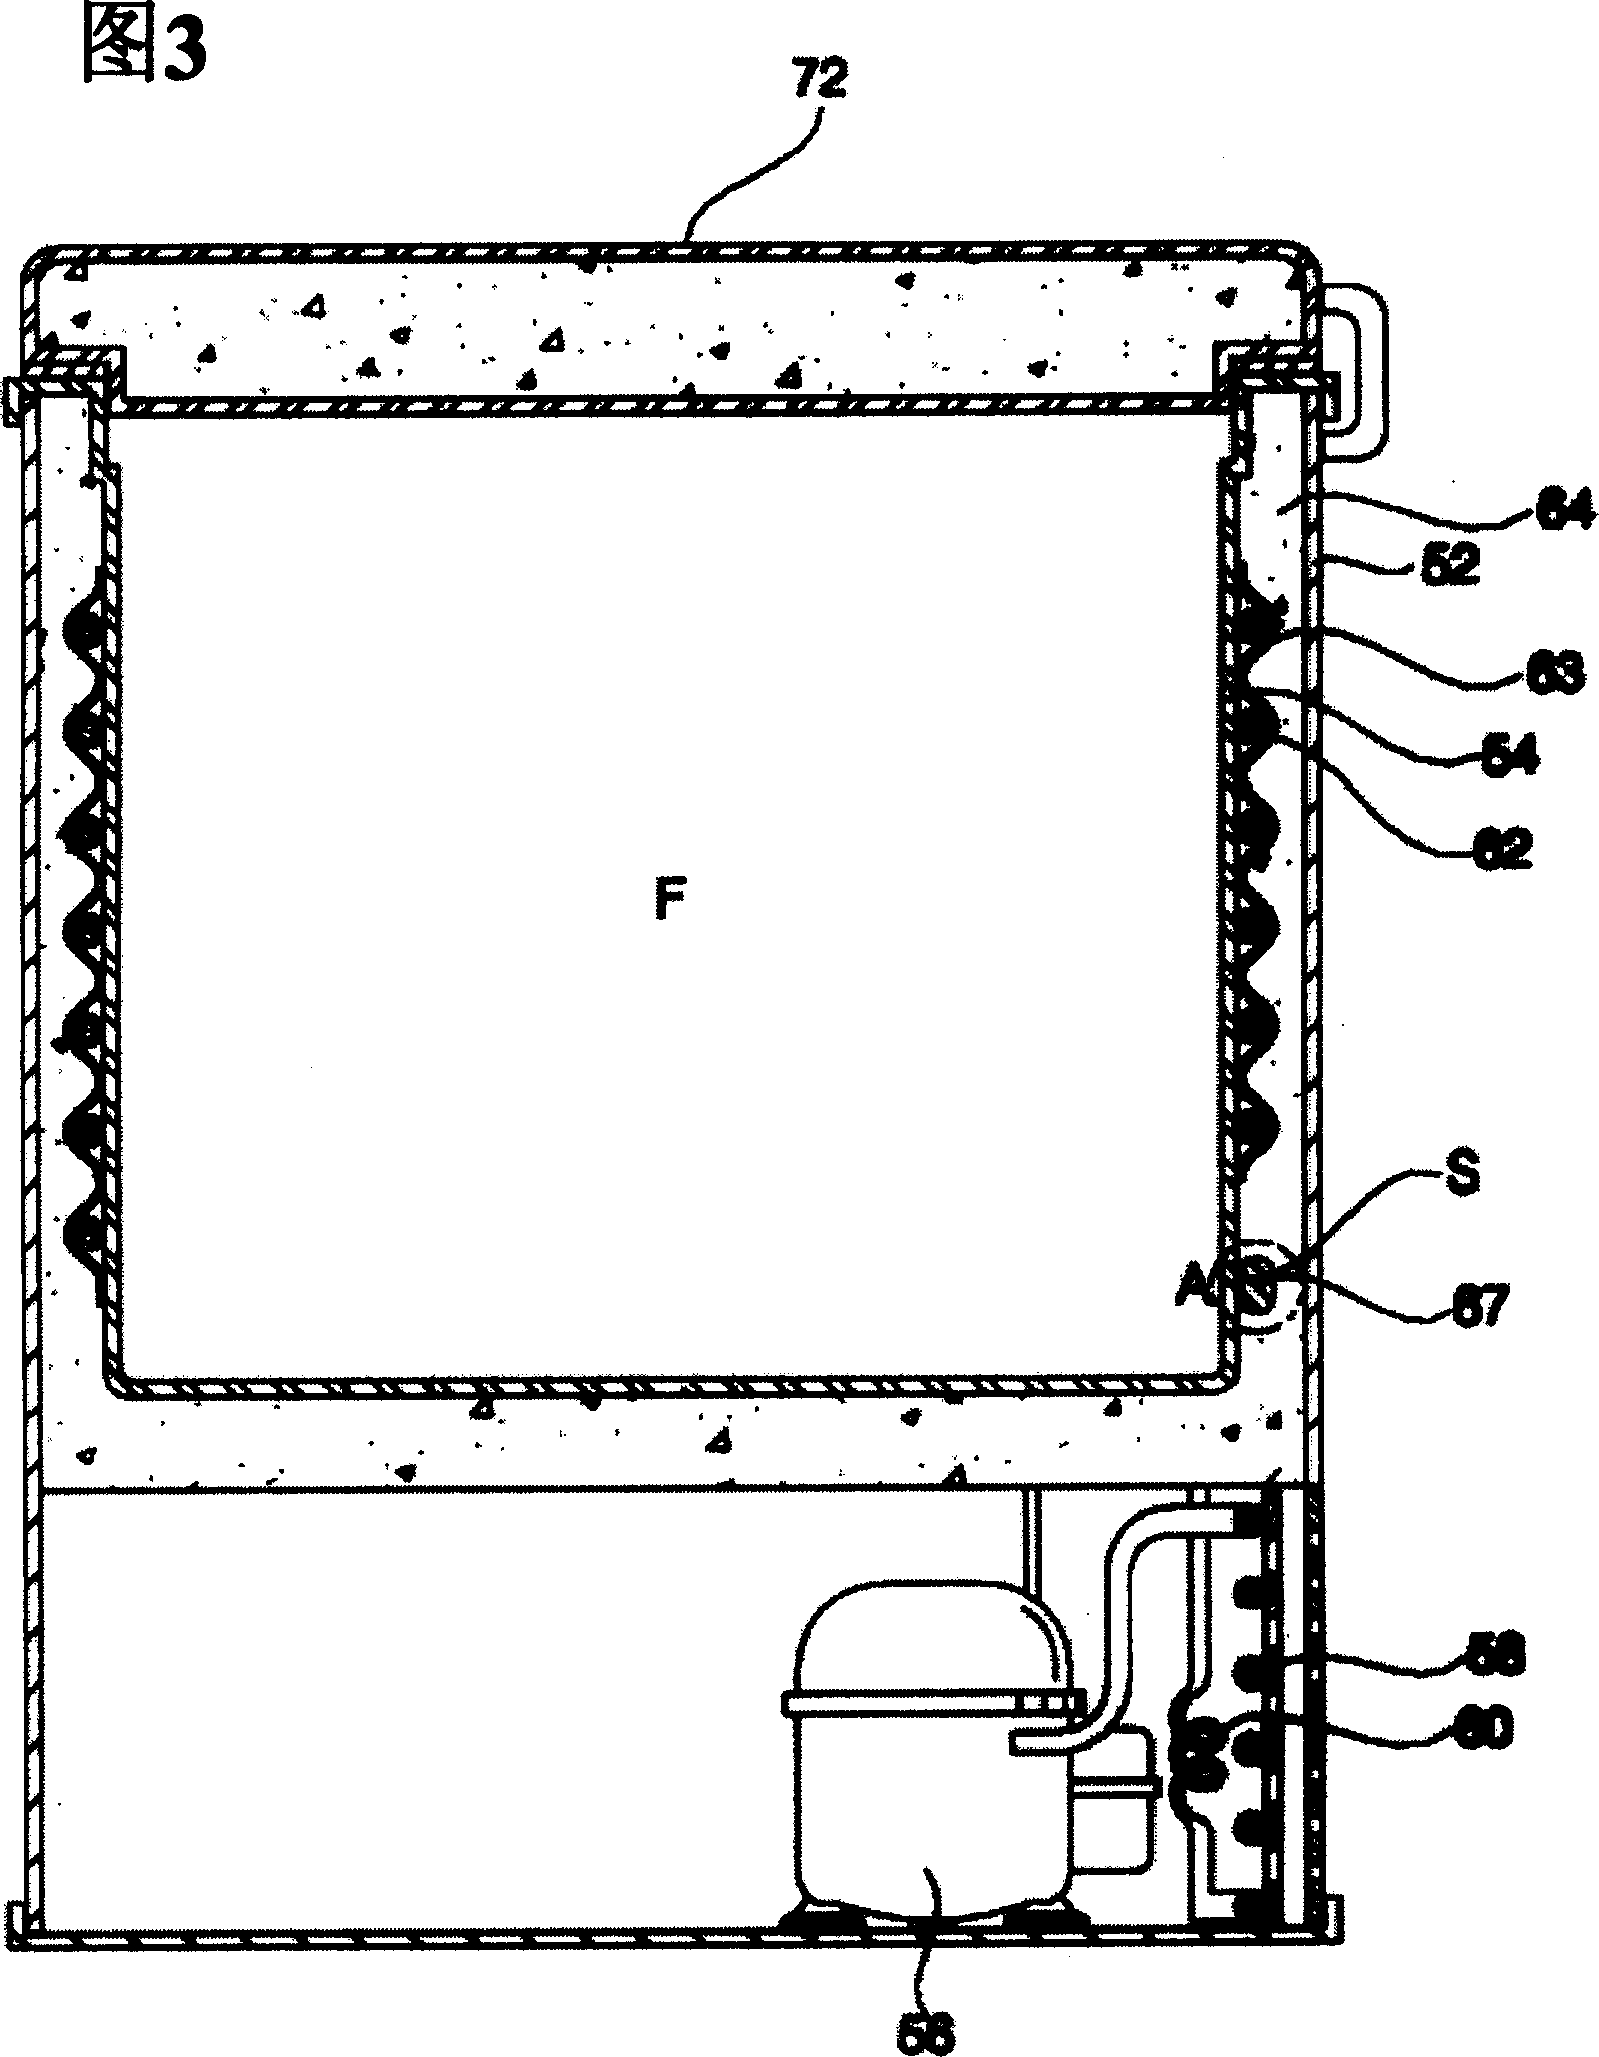 Installing method for refrigerator and its temperature sensor